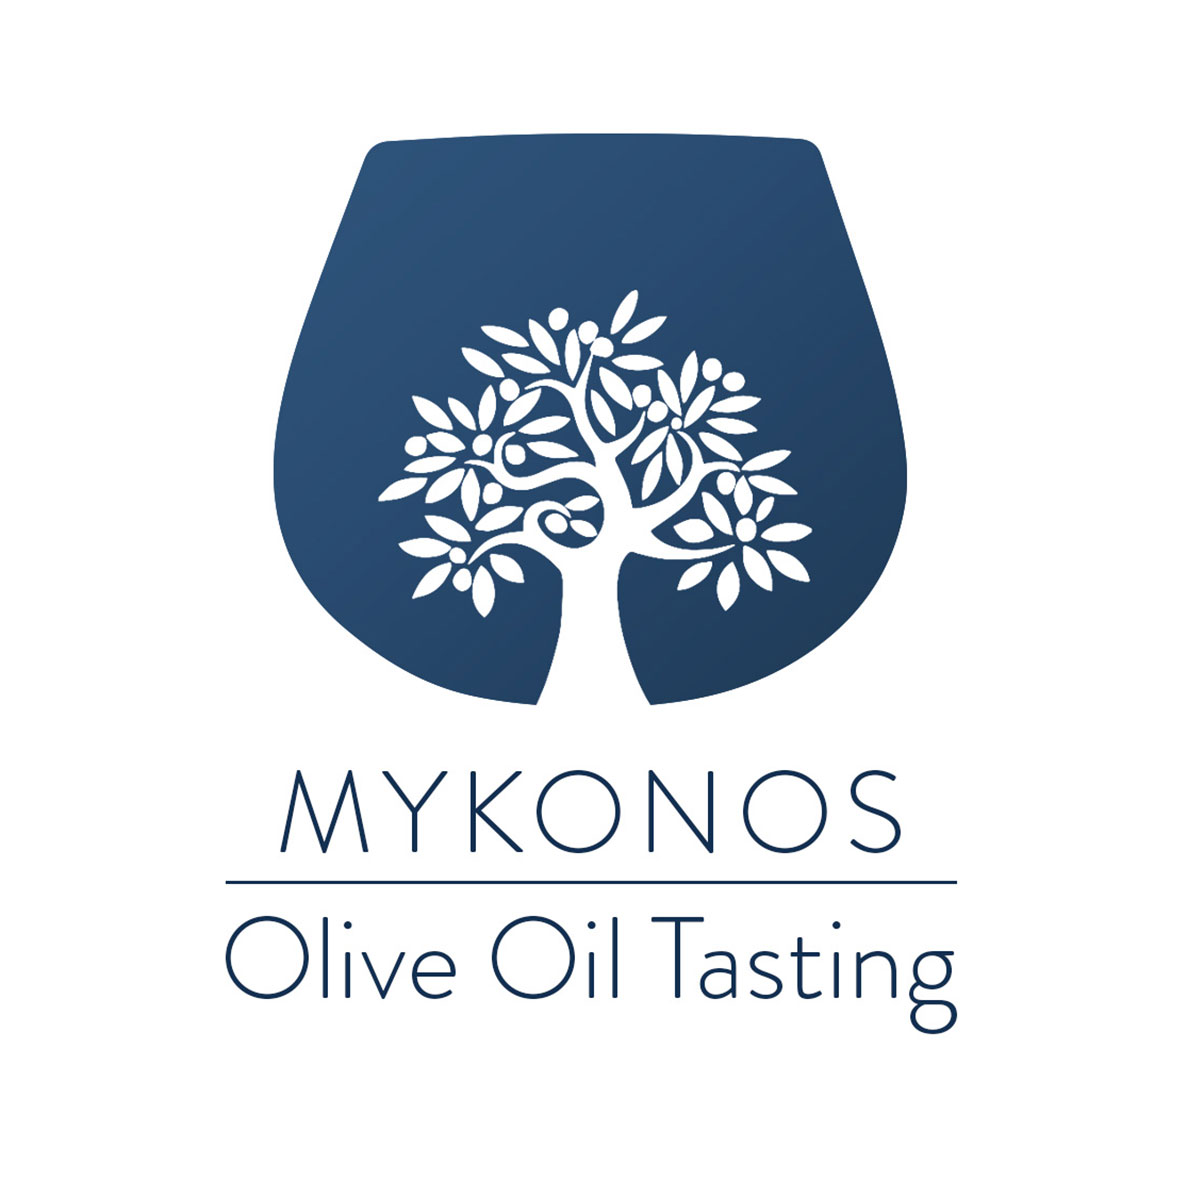 Mykonos Olive Oil Tasting